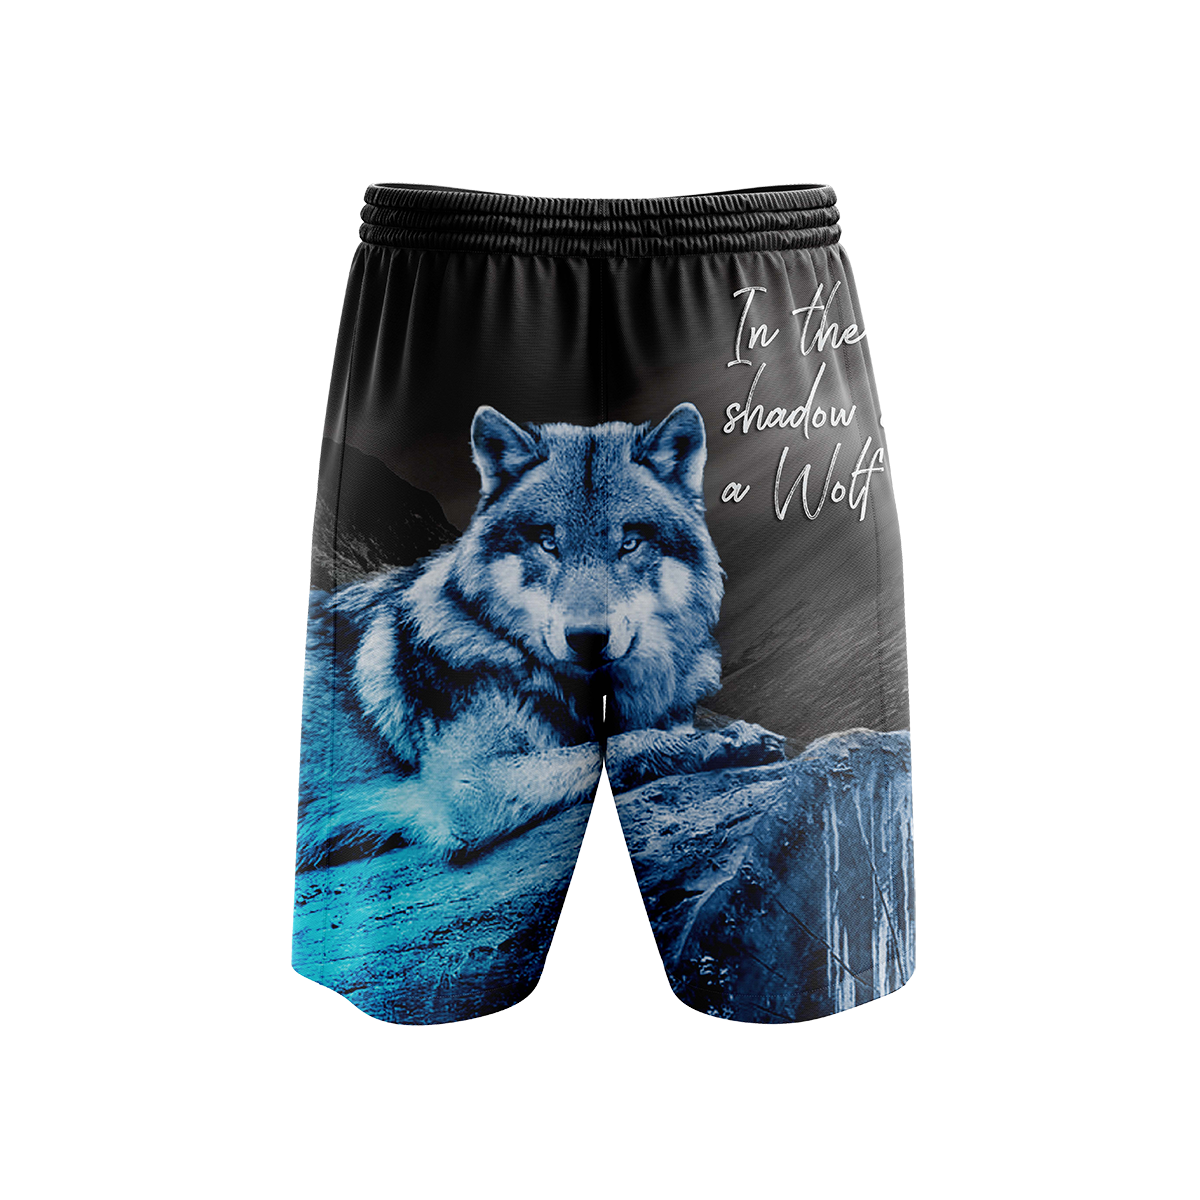 I Am Wolf Beach Shorts Short